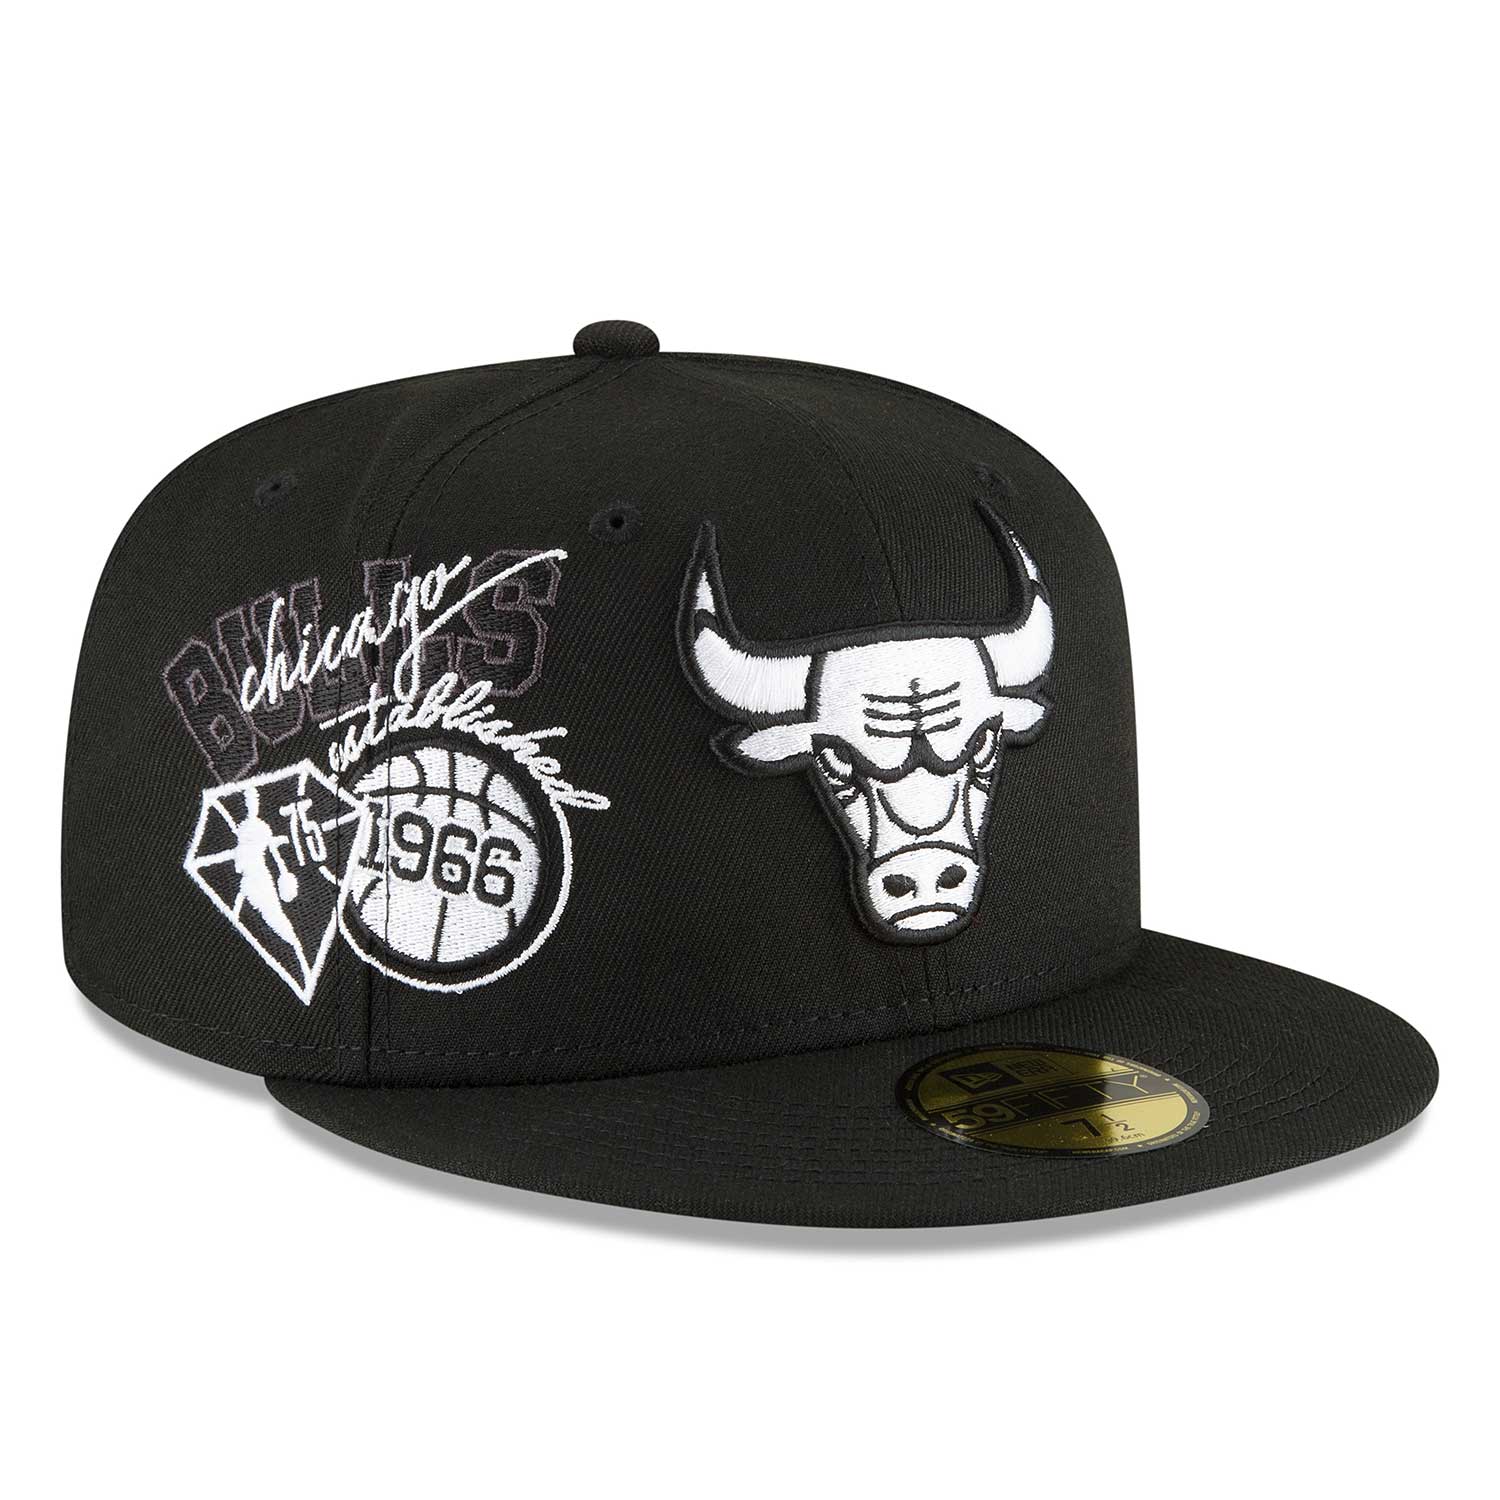 Chicago Bulls MONOCHROME XL-LOGO Grey-Black Fitted Hat